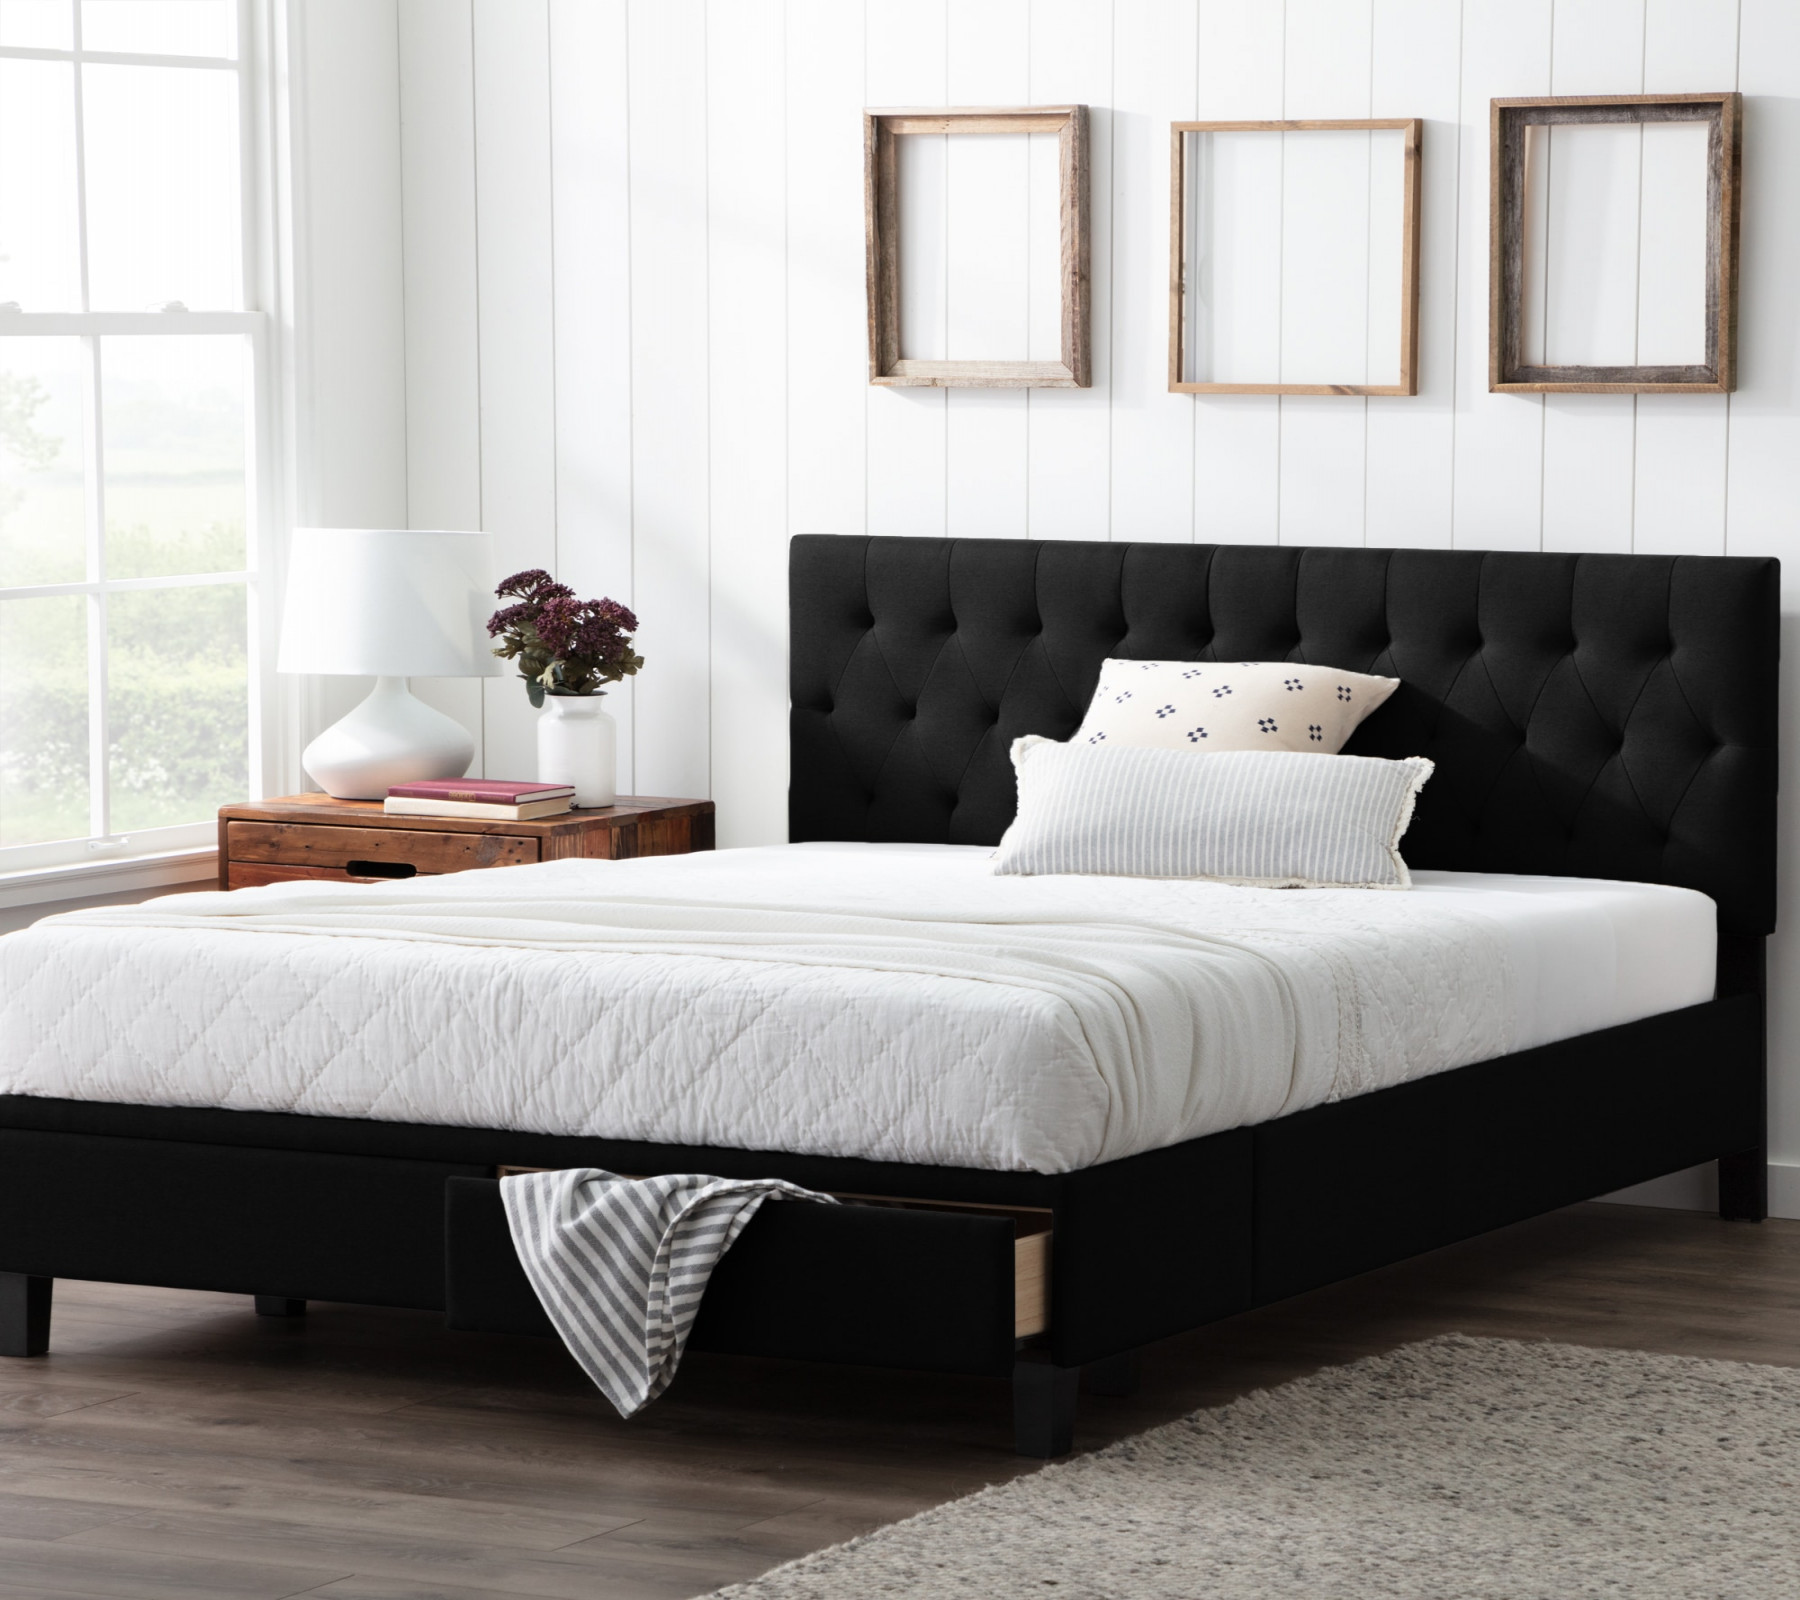 Homfa Queen Bed Frame With Headboard, Modern Upholstered Platform